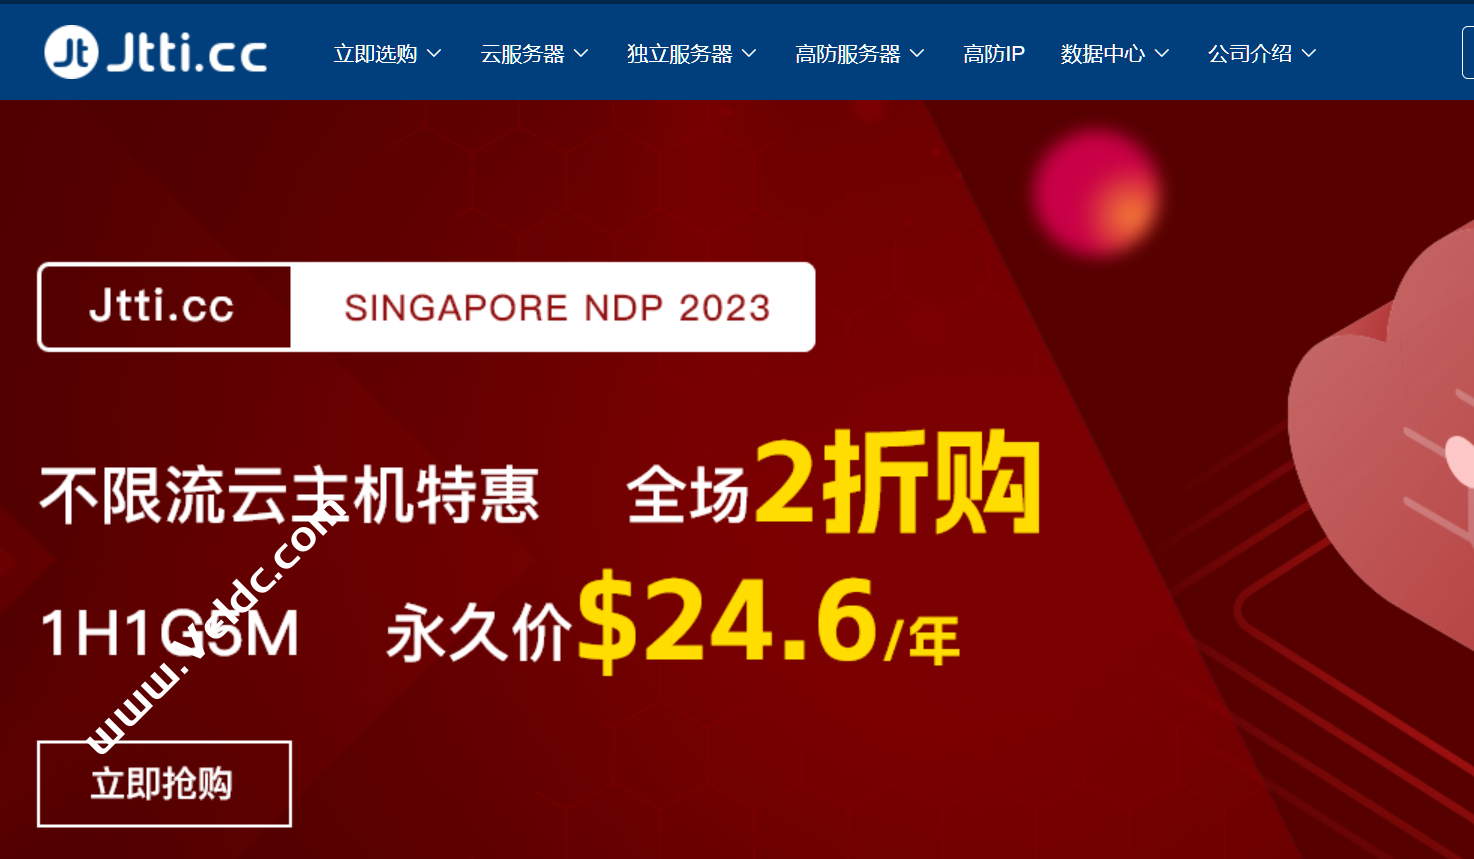 #Jtti NDP 2023促销# 新加坡/香港/美国vps云服务器全场2折购，5M CN2永久价$24.6/年